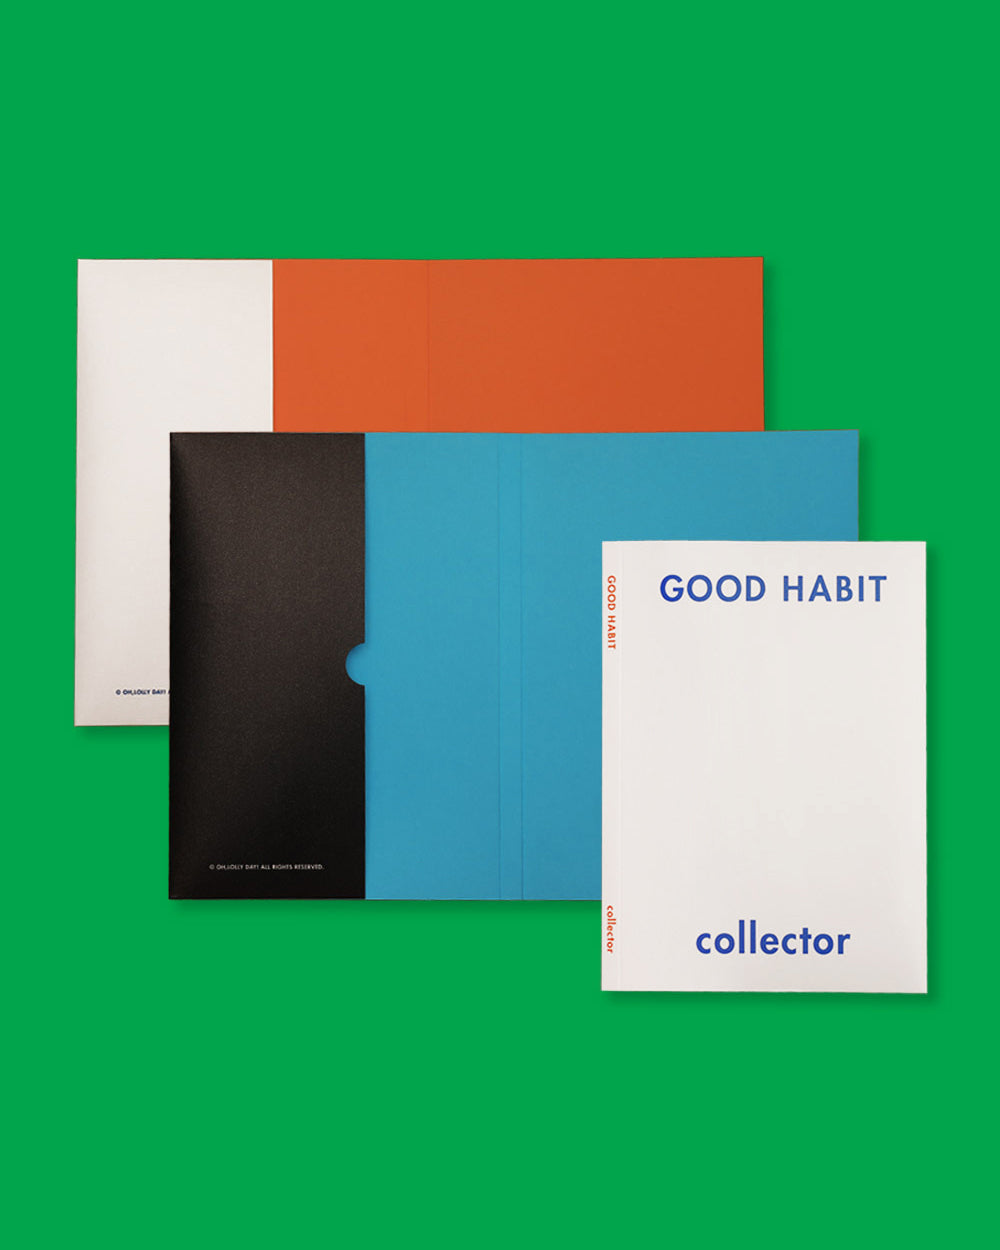 [File] Good habit collector_A4